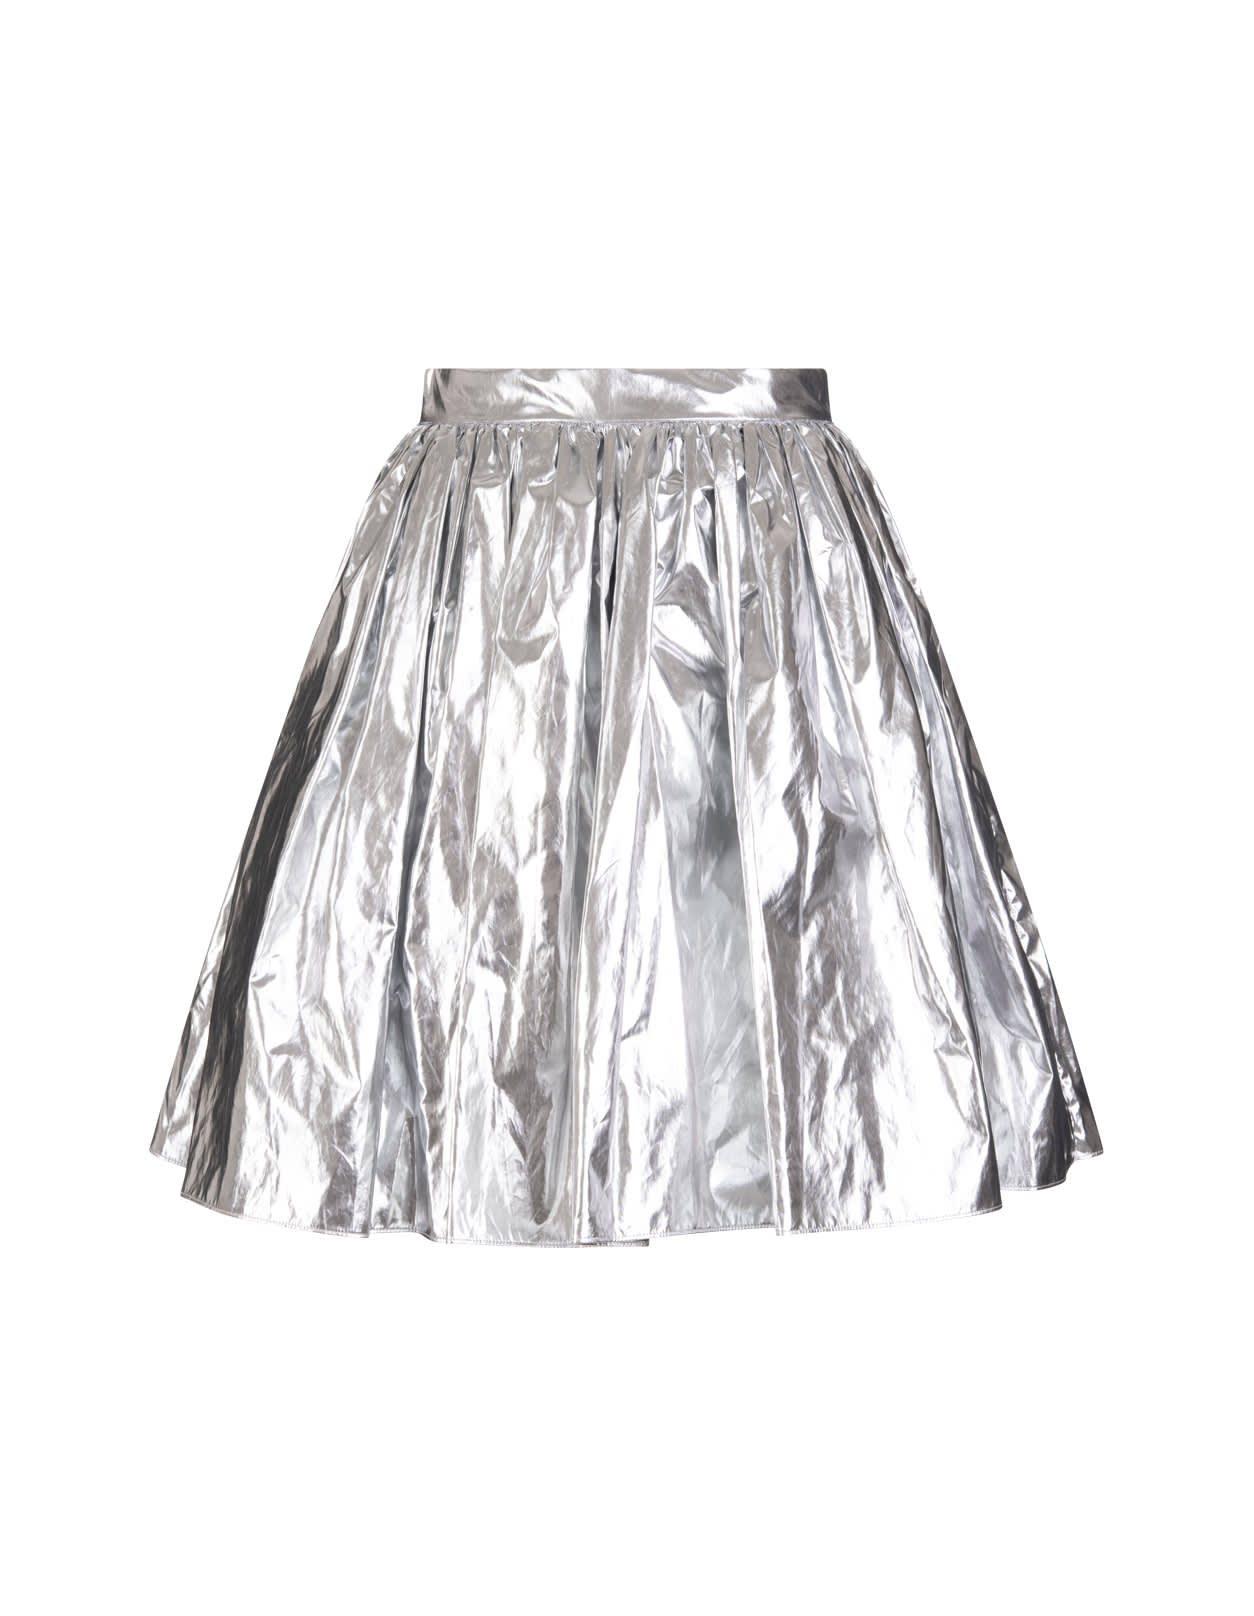 Alexander McQueen Woman Silver Metallic Curled Mini Skirt